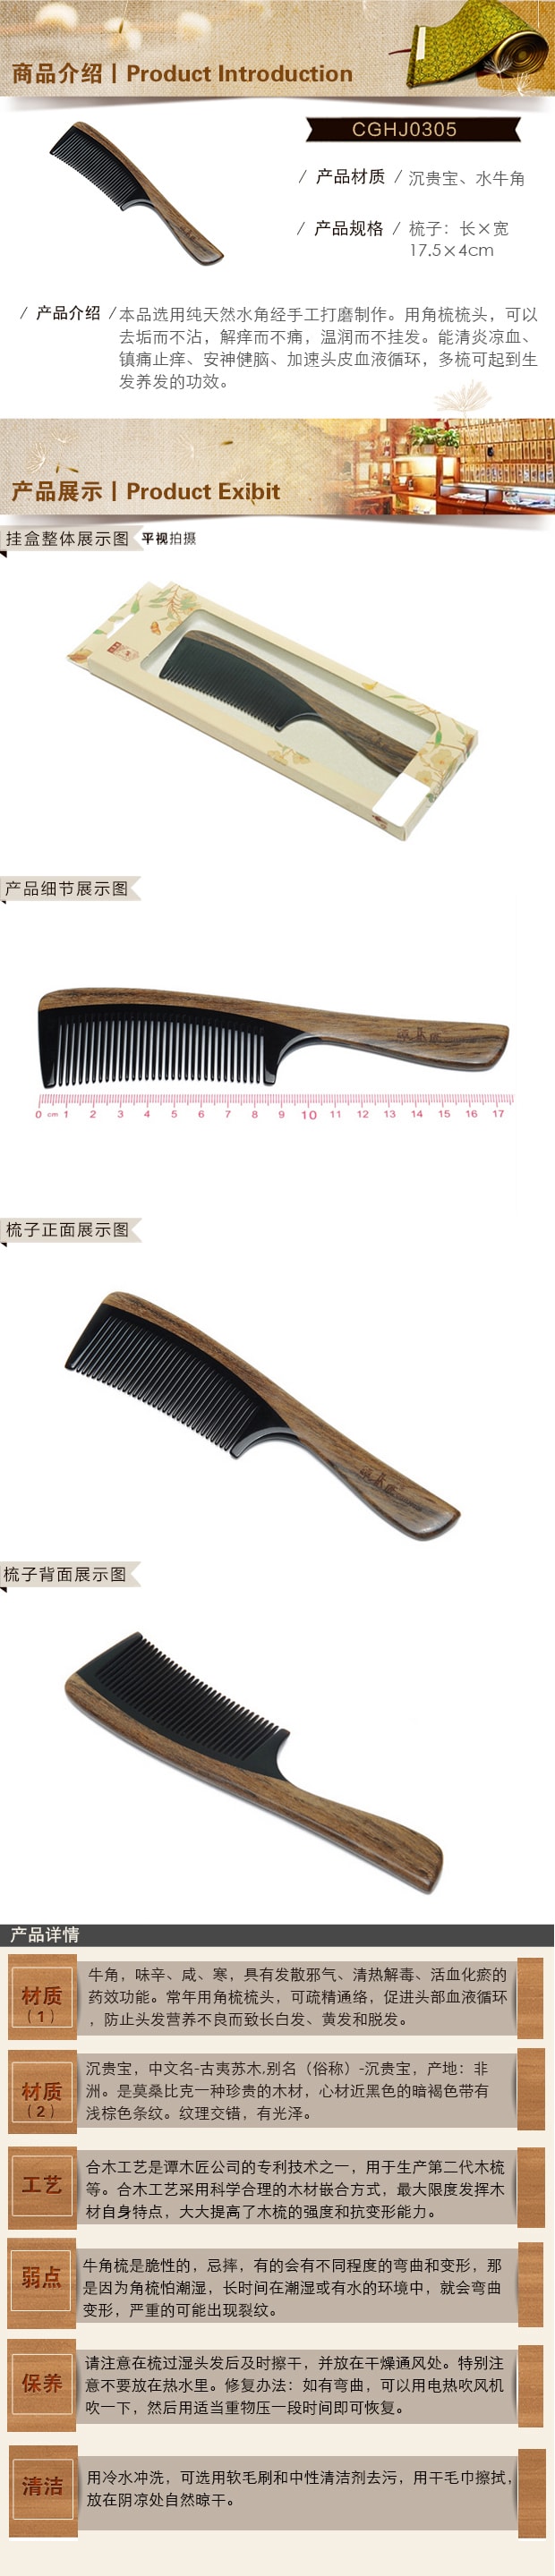 TAN MUJIANG Horn comb with Anti-Static & No Snag Handmade Natural comb Brush for Beard Head Hair Mustache 1 piece